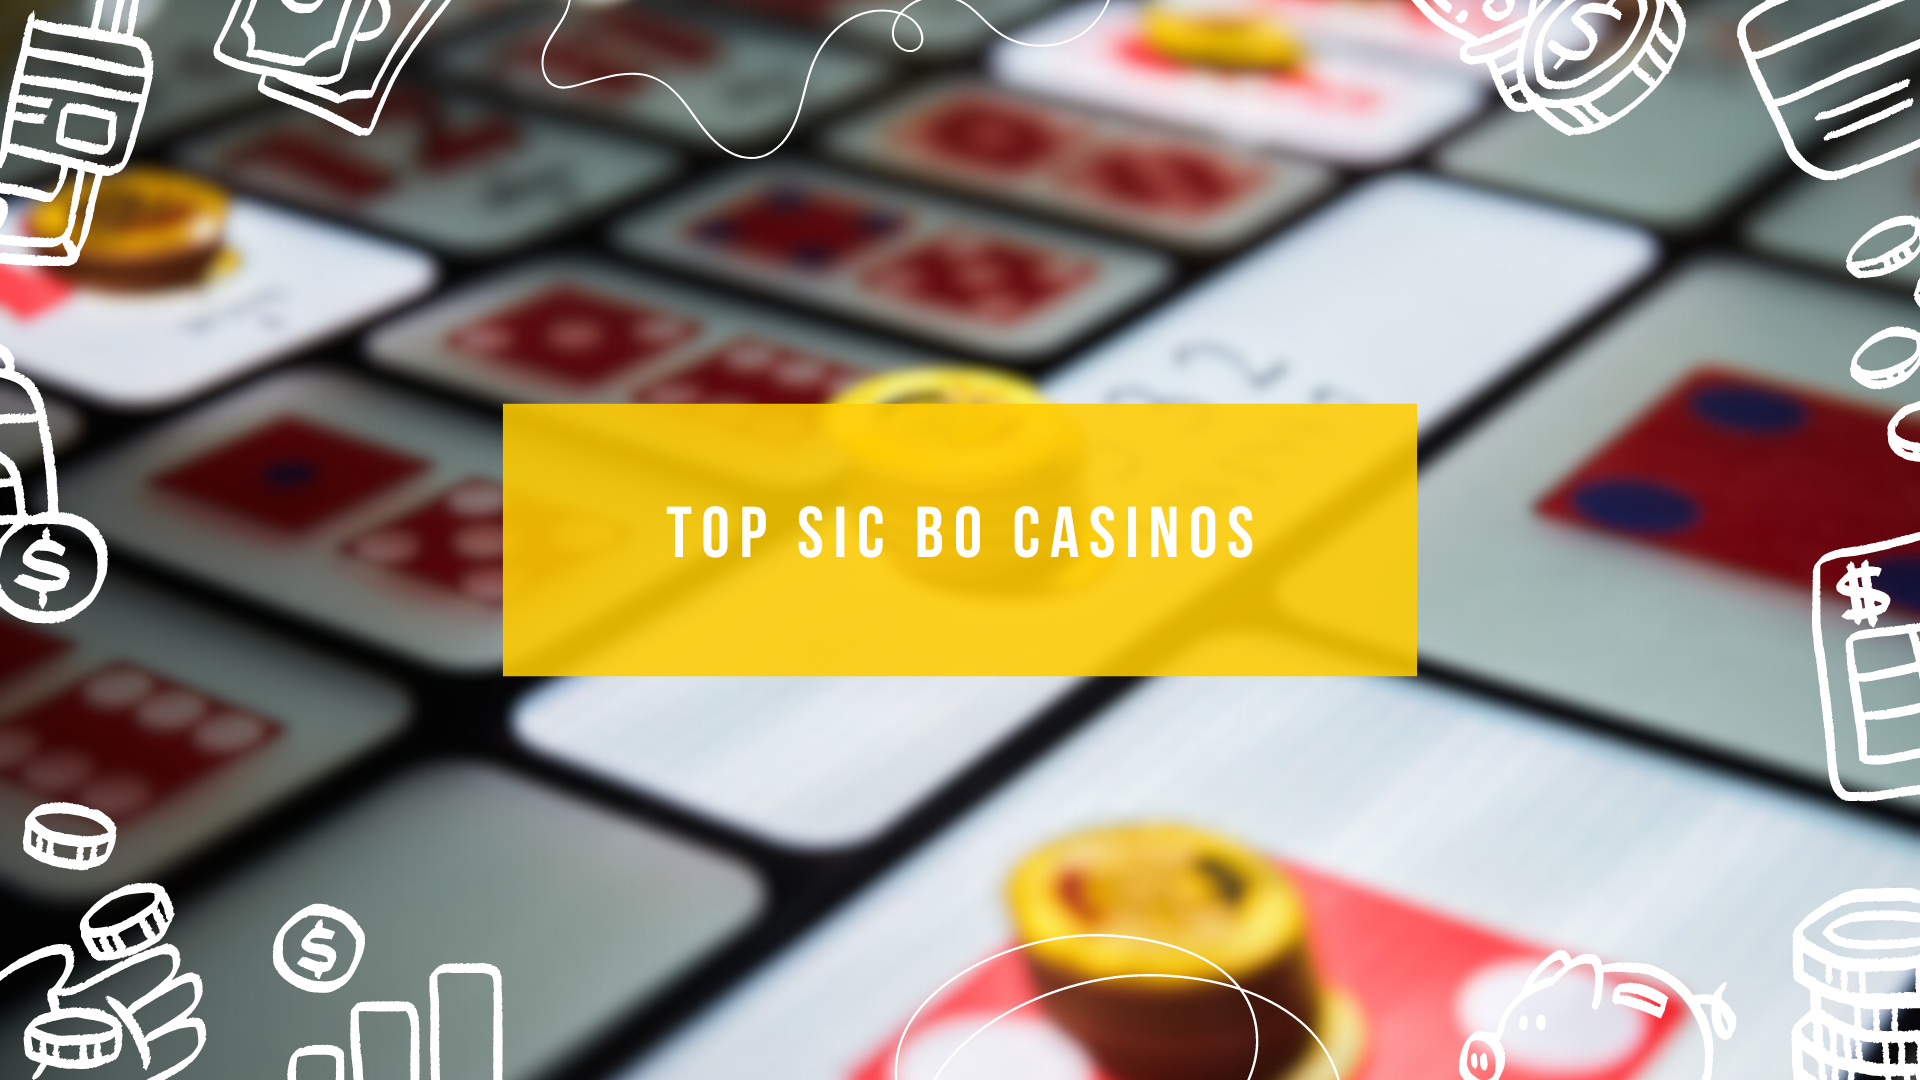 Top Sic Bo Casinos